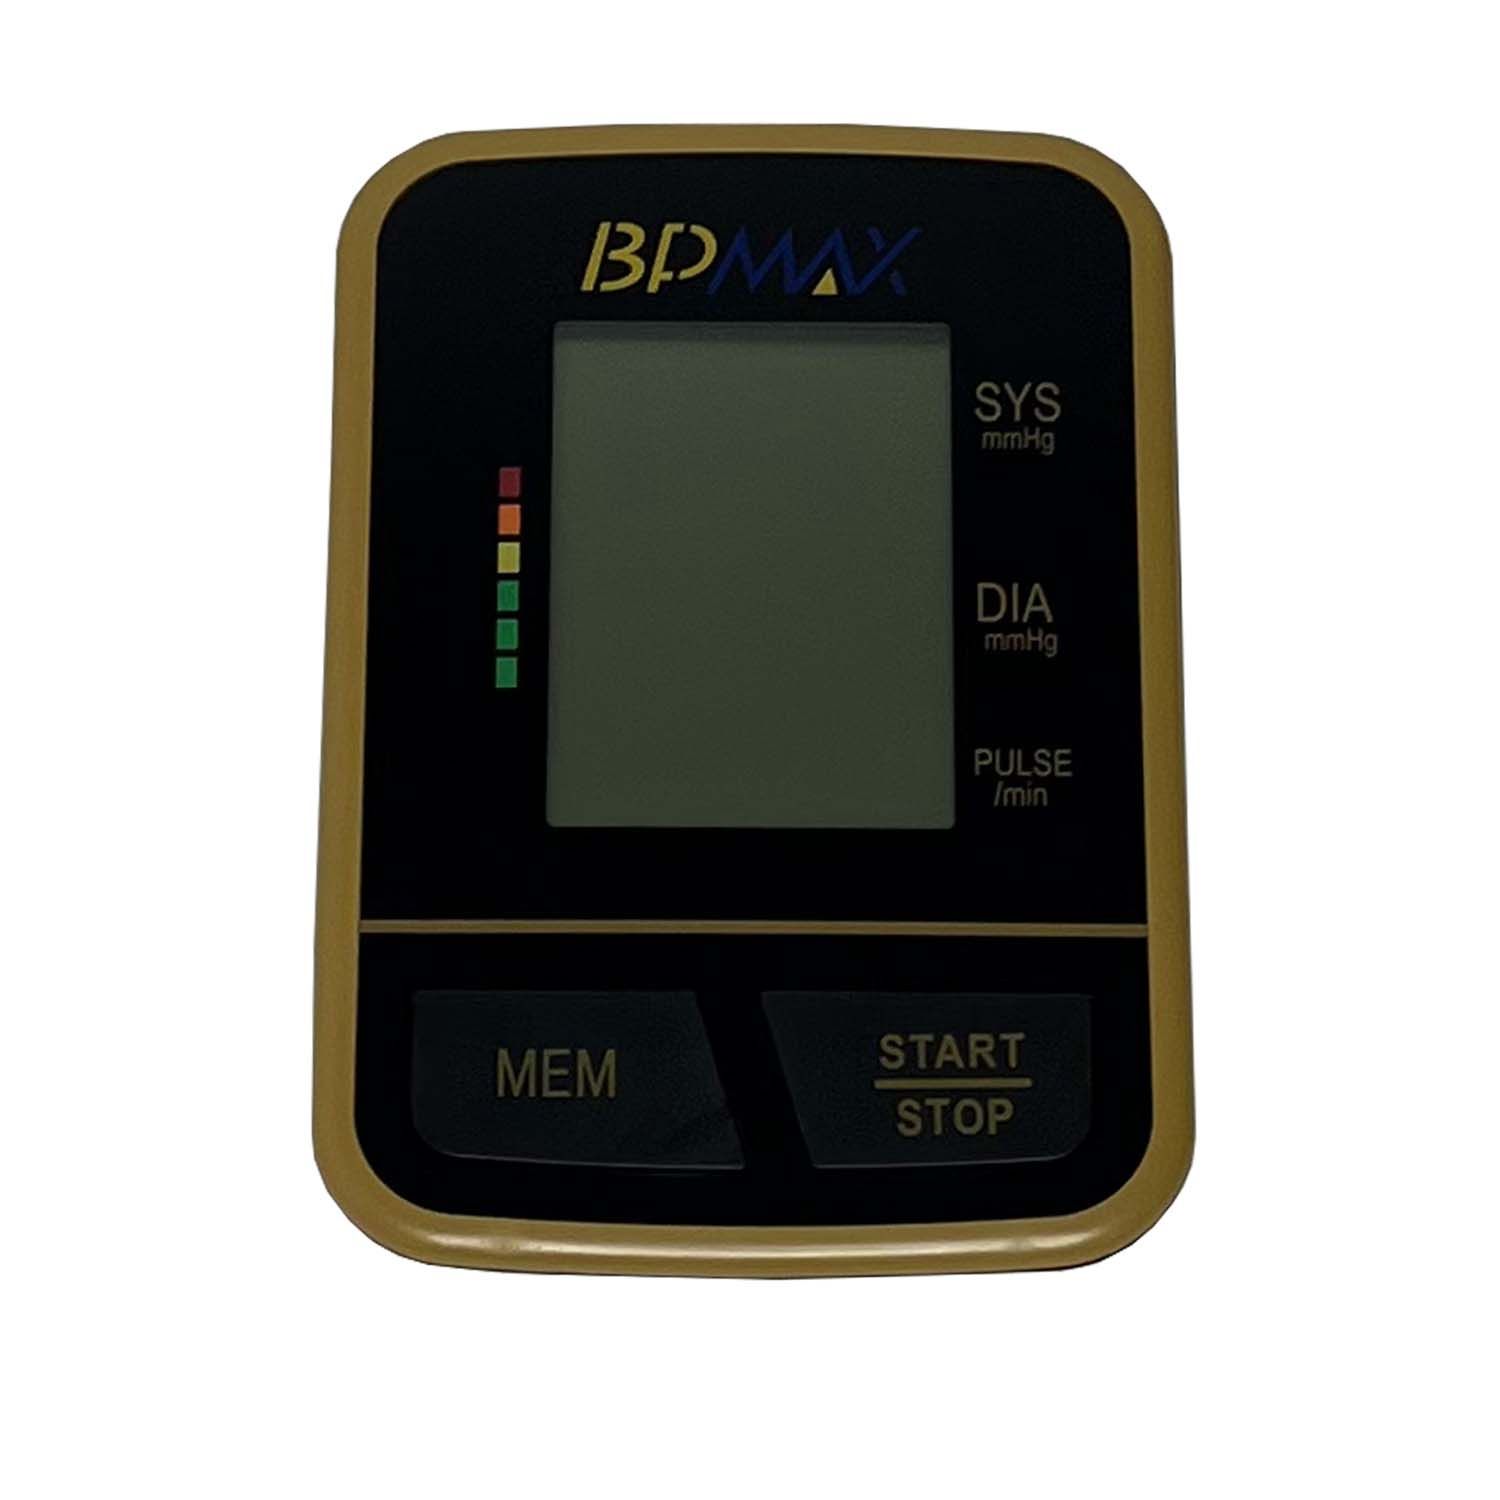 فشارسنج دیجیتال بی پی مکس مدل DBP-1231 به همراه کاف اضافه -  - 1